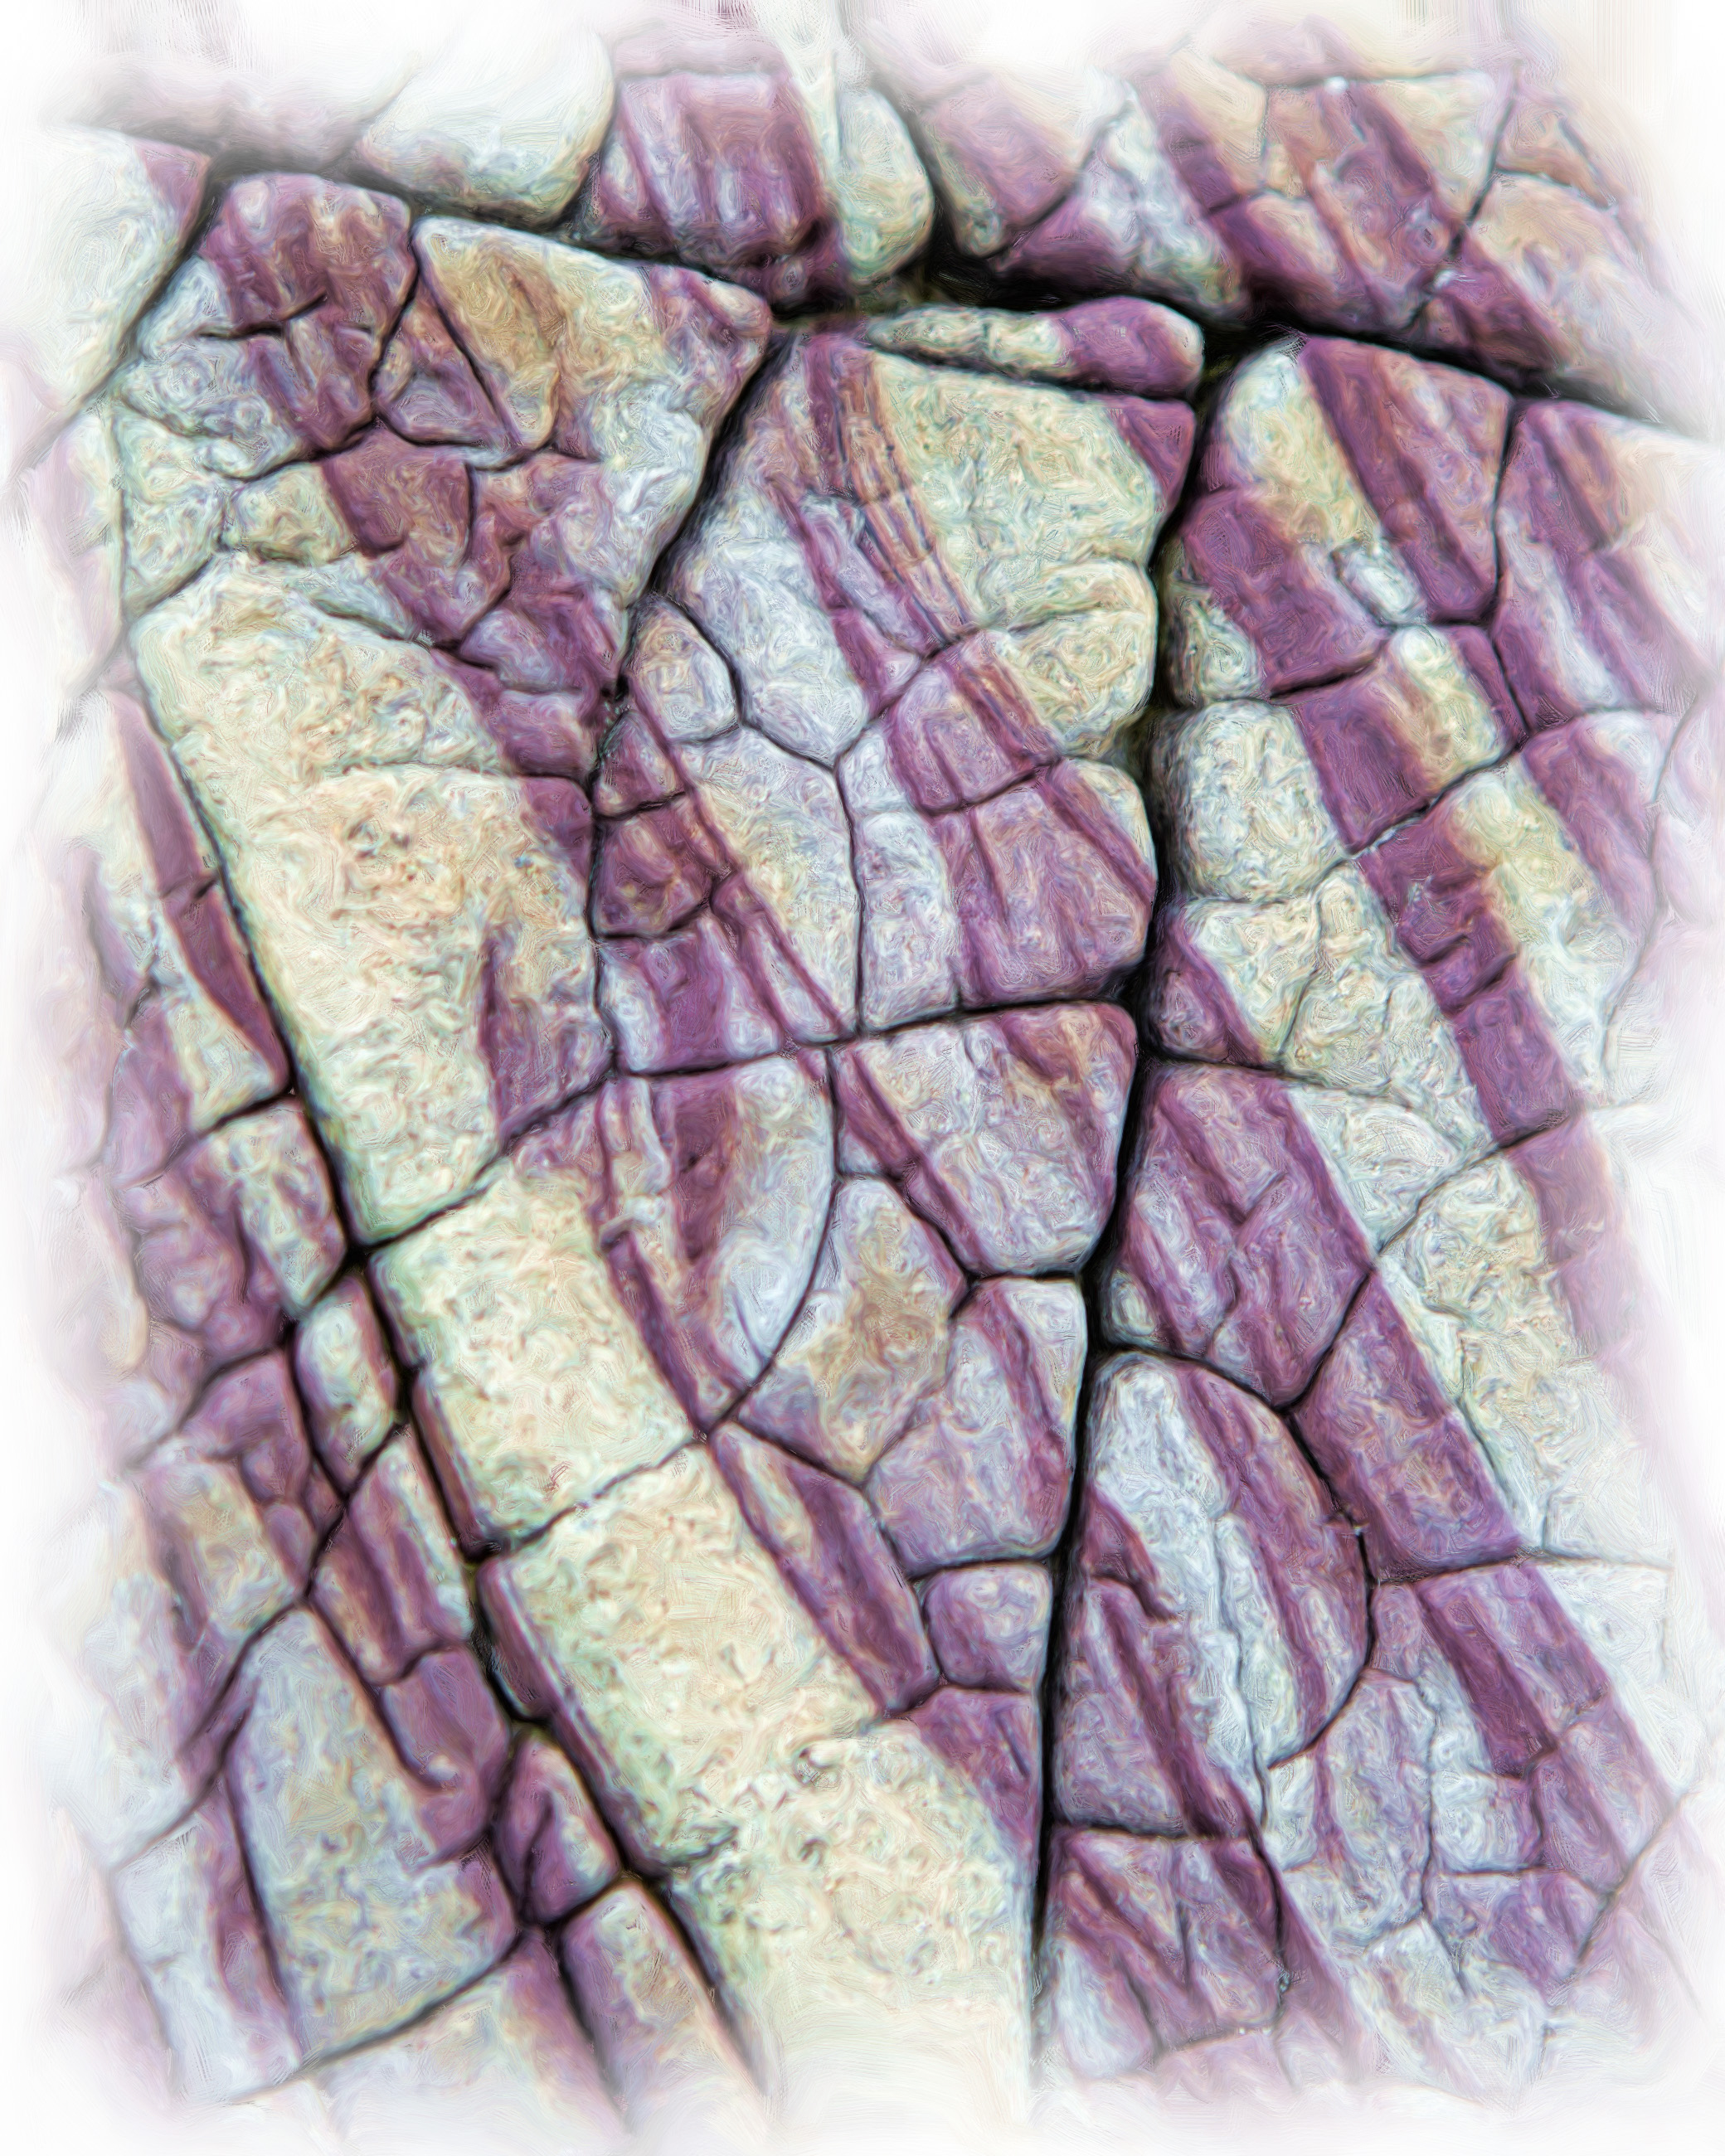 Rock texture photo